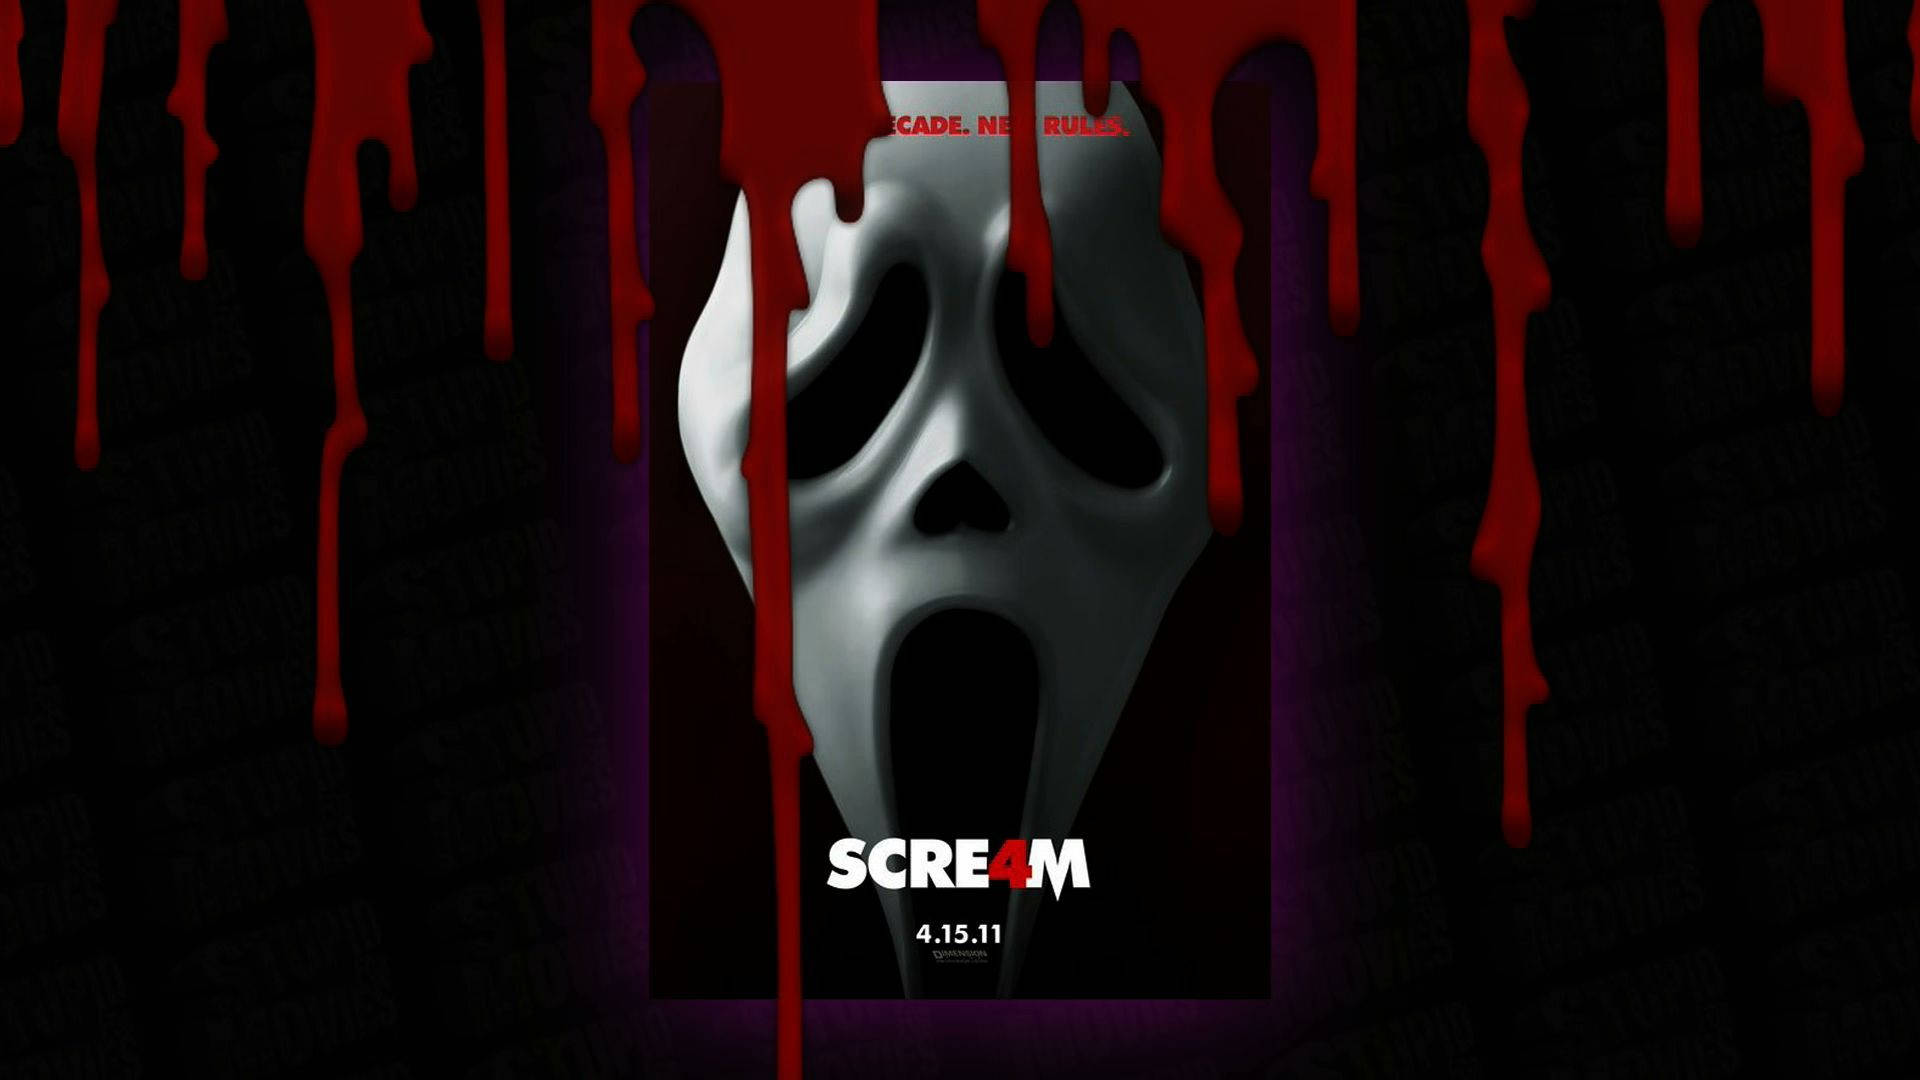 Scream 1920X1080 wallpaper